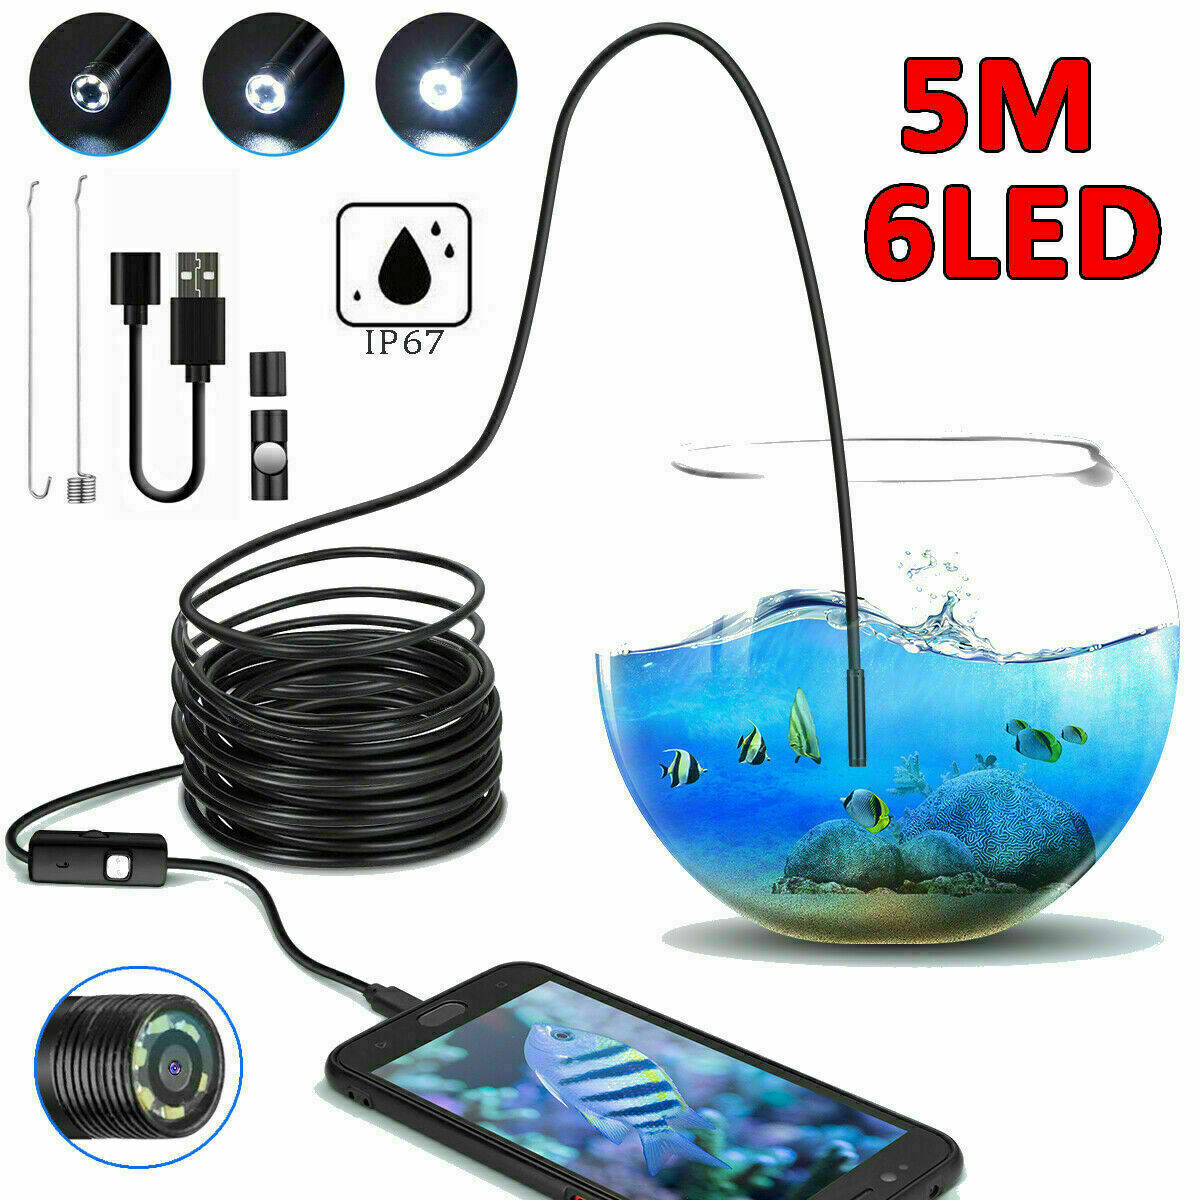 1m 2mm USB Endoskop Wasserdicht Endoscope Inspektion Kamera mit 6 LED Rohrkamera 